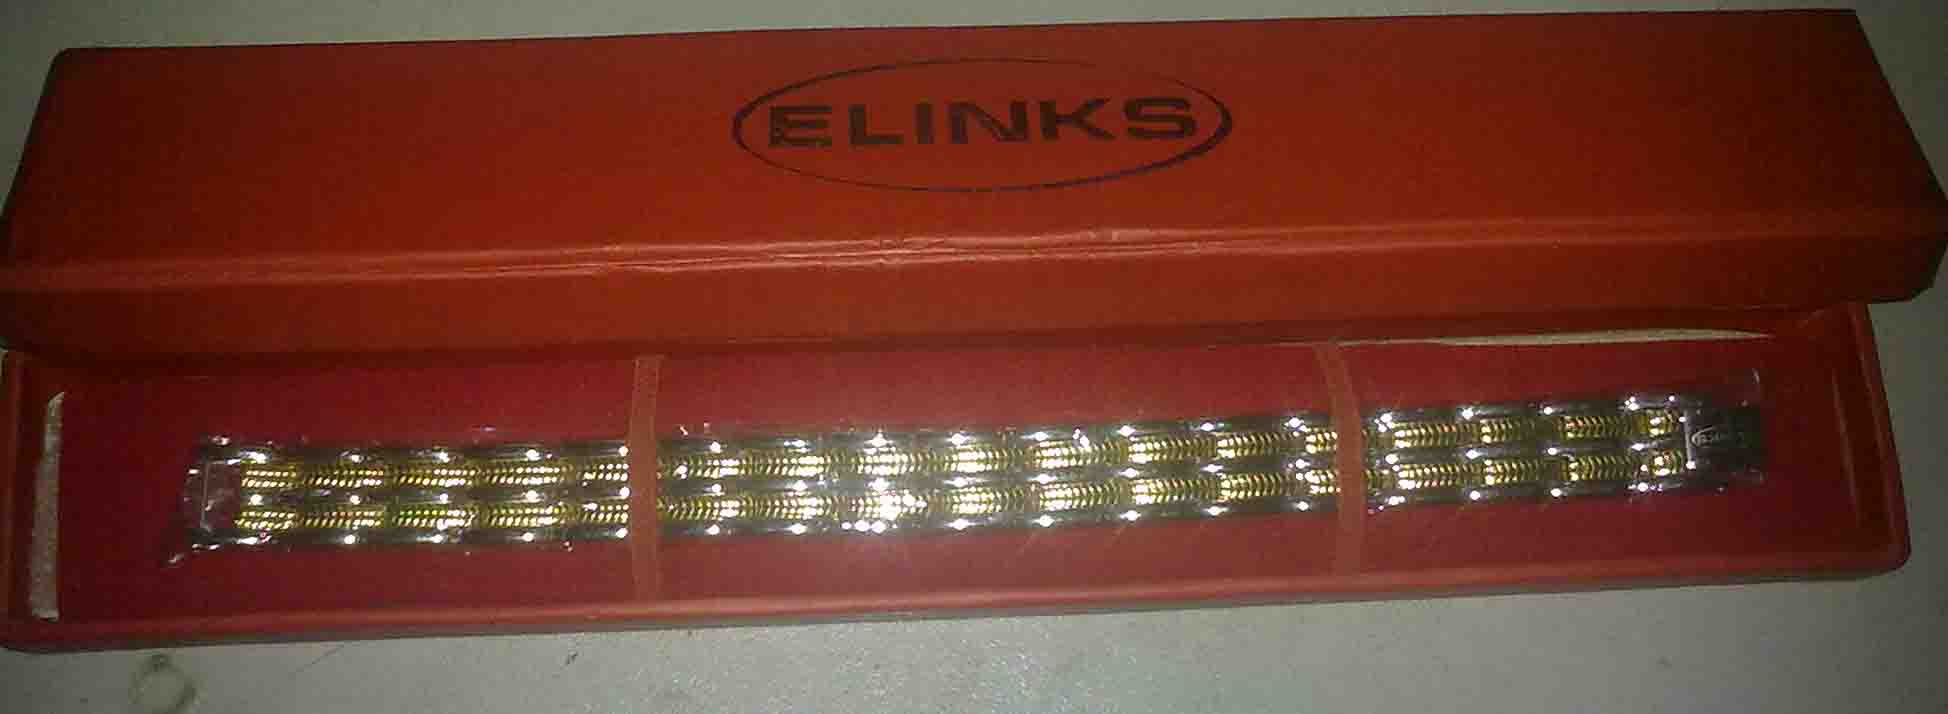 Elinks Bracelet 01753718908 large image 0